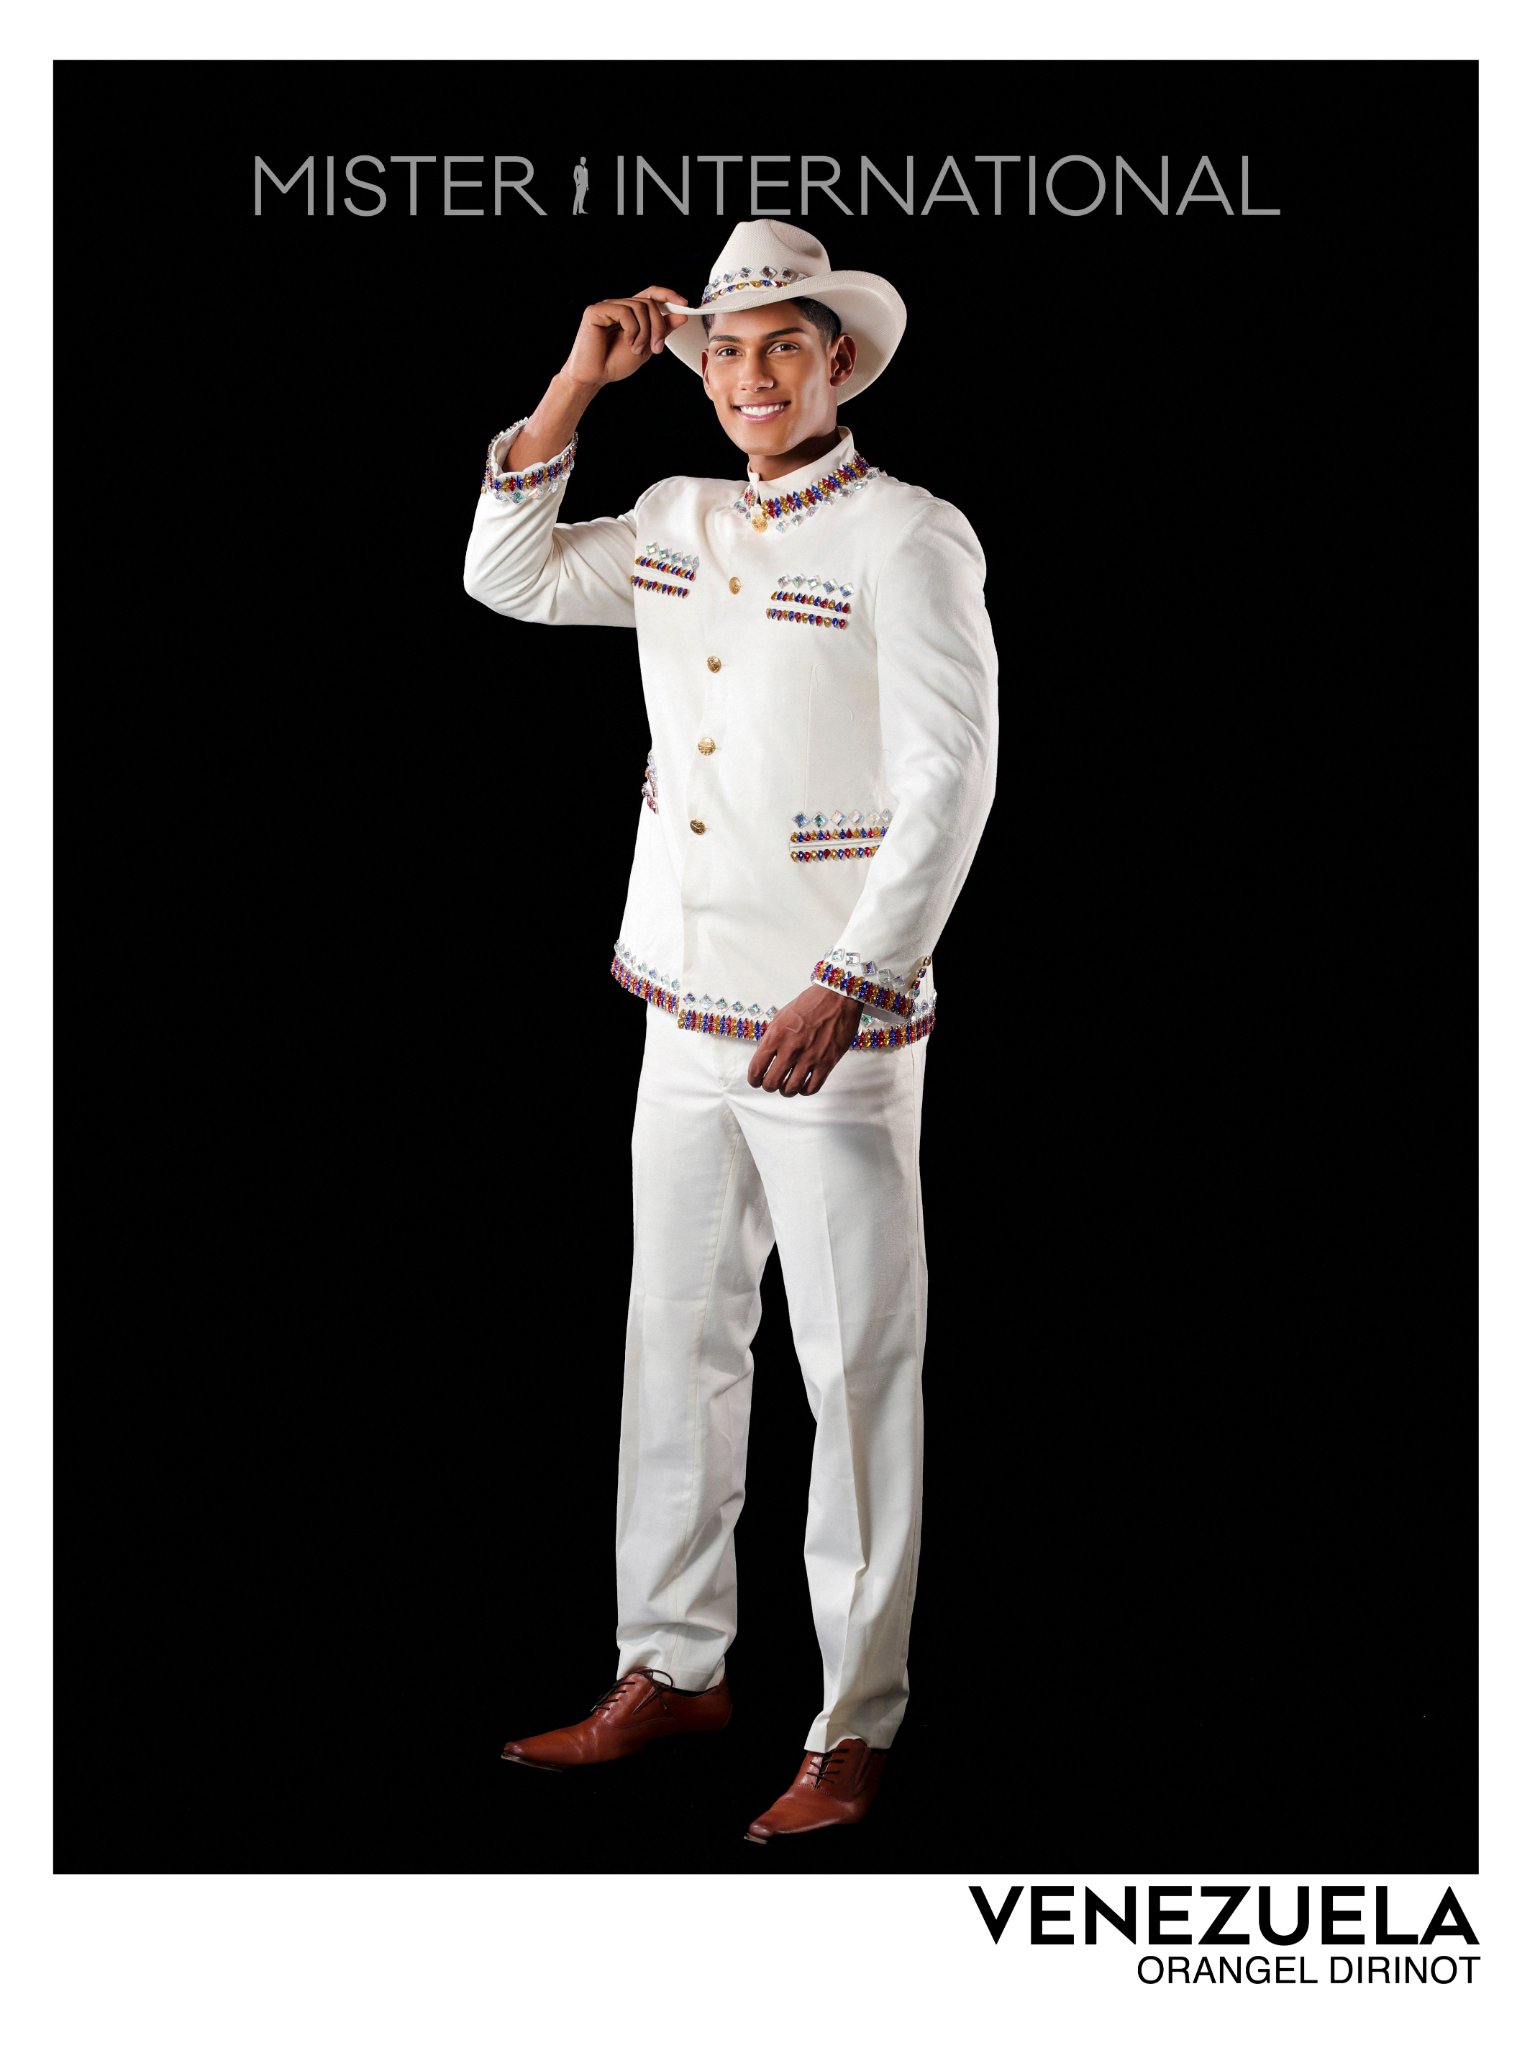 Mister International 2022 VENEZUELA Orangel Dirinot National Costume Shot by Raymond Saldana